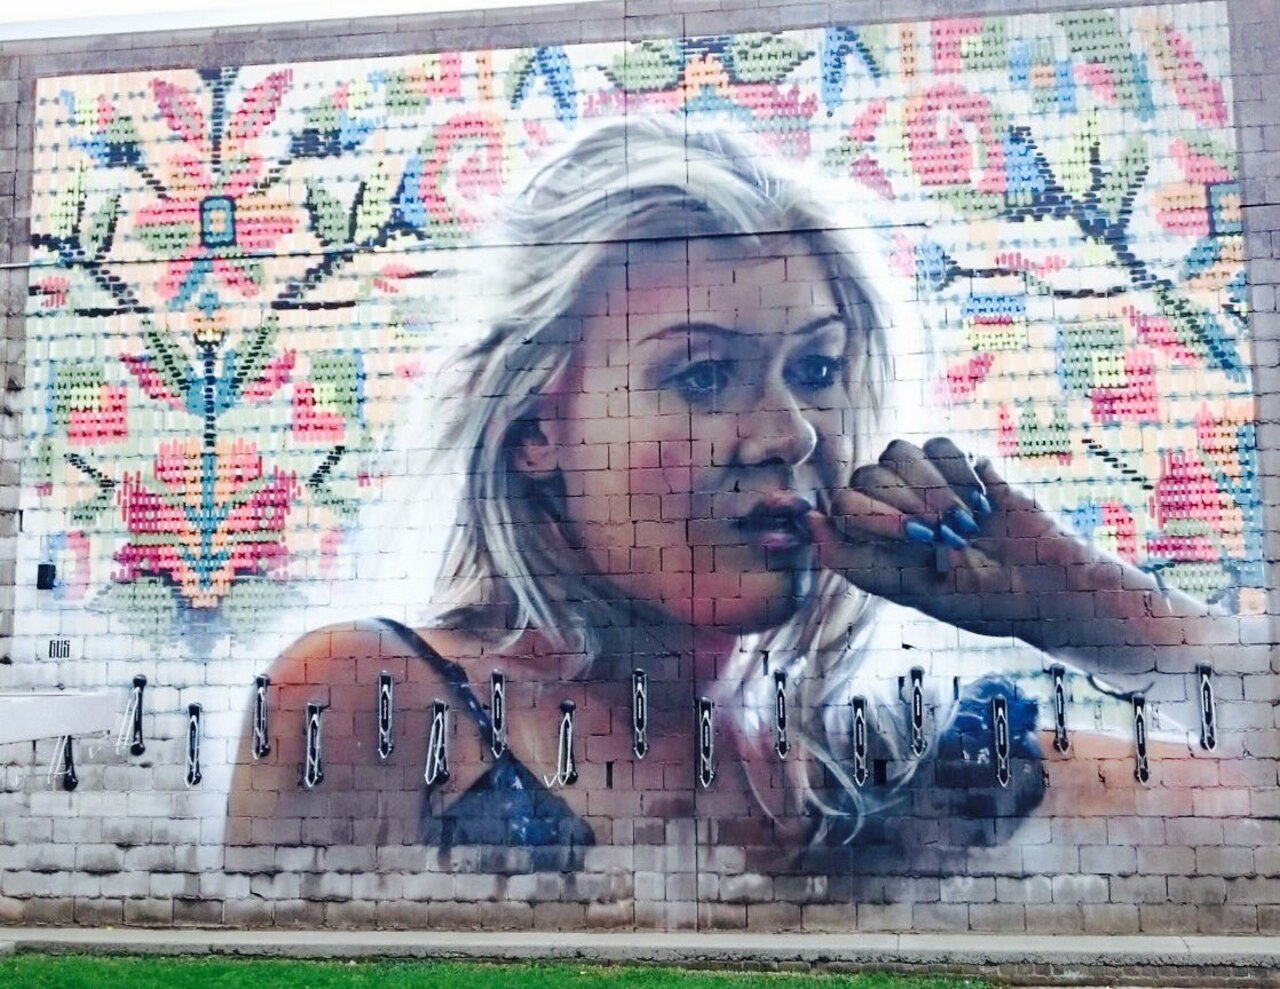 #mural by Instaguss #Brisbane #Australia #streetart #art #graffiti https://t.co/SGVWYRrHXH